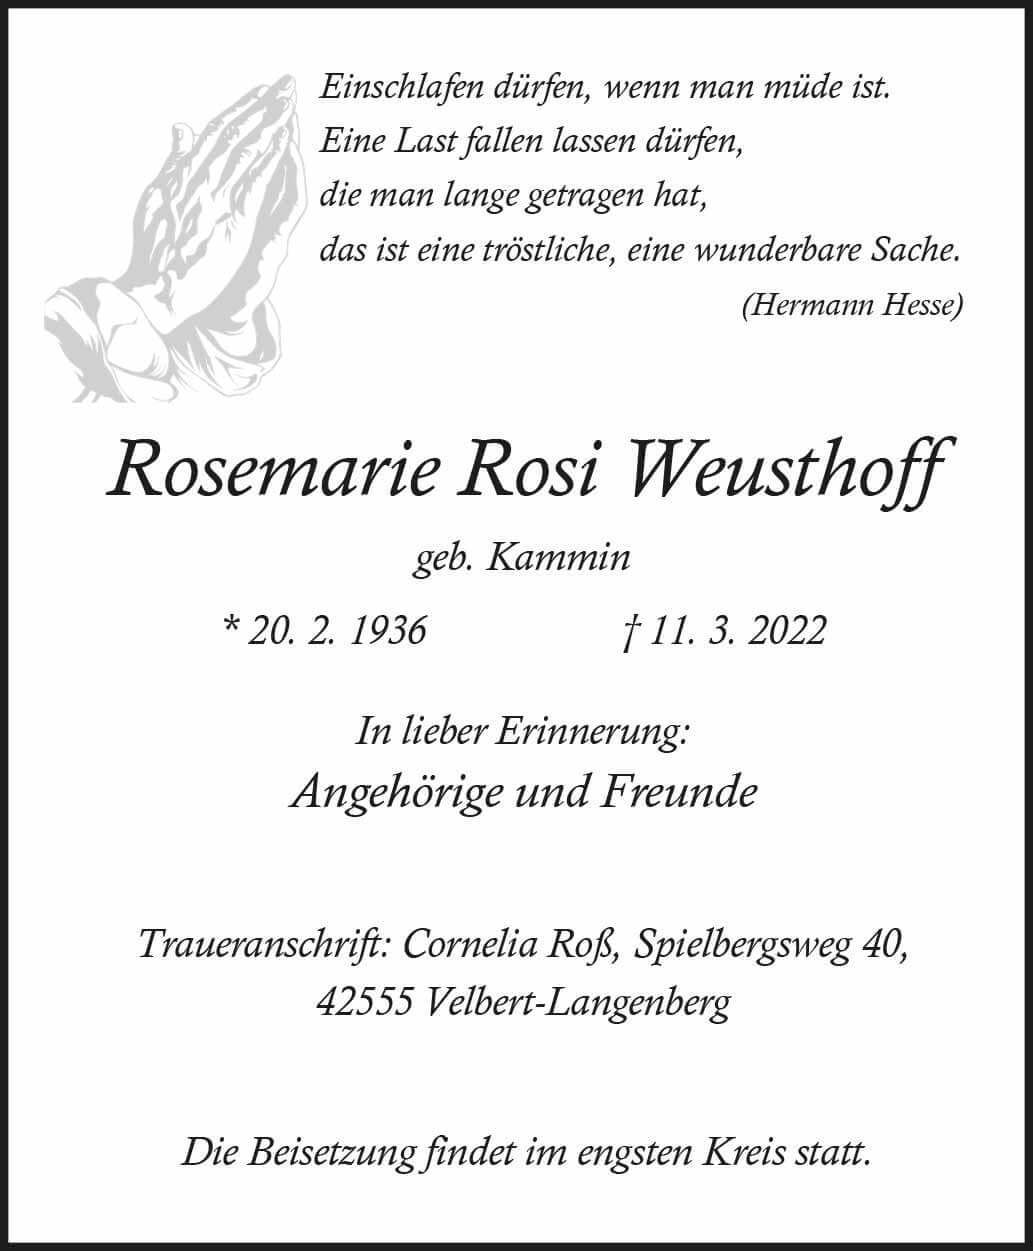 Rosemarie Rosi Weusthoff † 11. 3. 2022